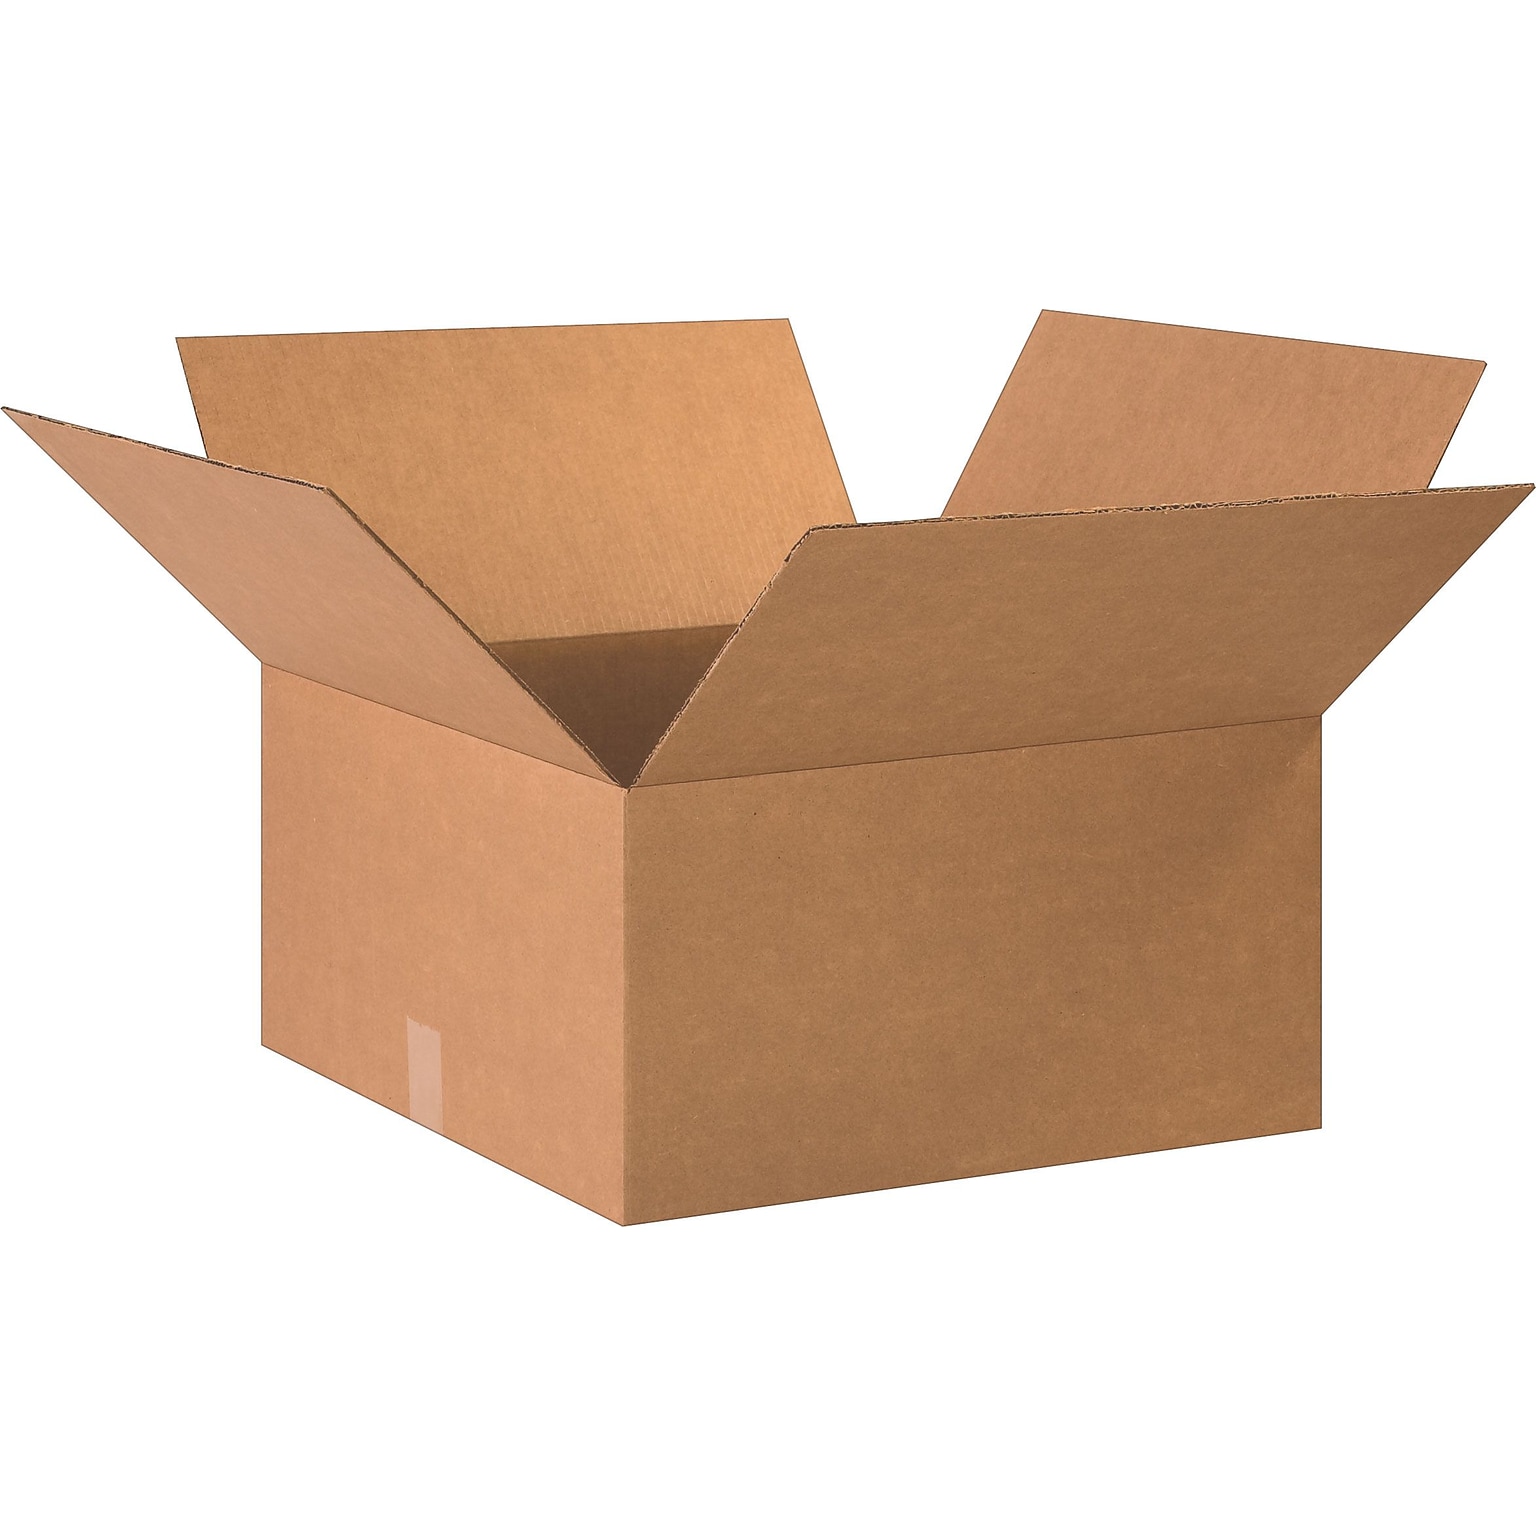 20 x 20 x 10 Shipping Boxes, 32 ECT, Brown, 15/Bundle (202010)